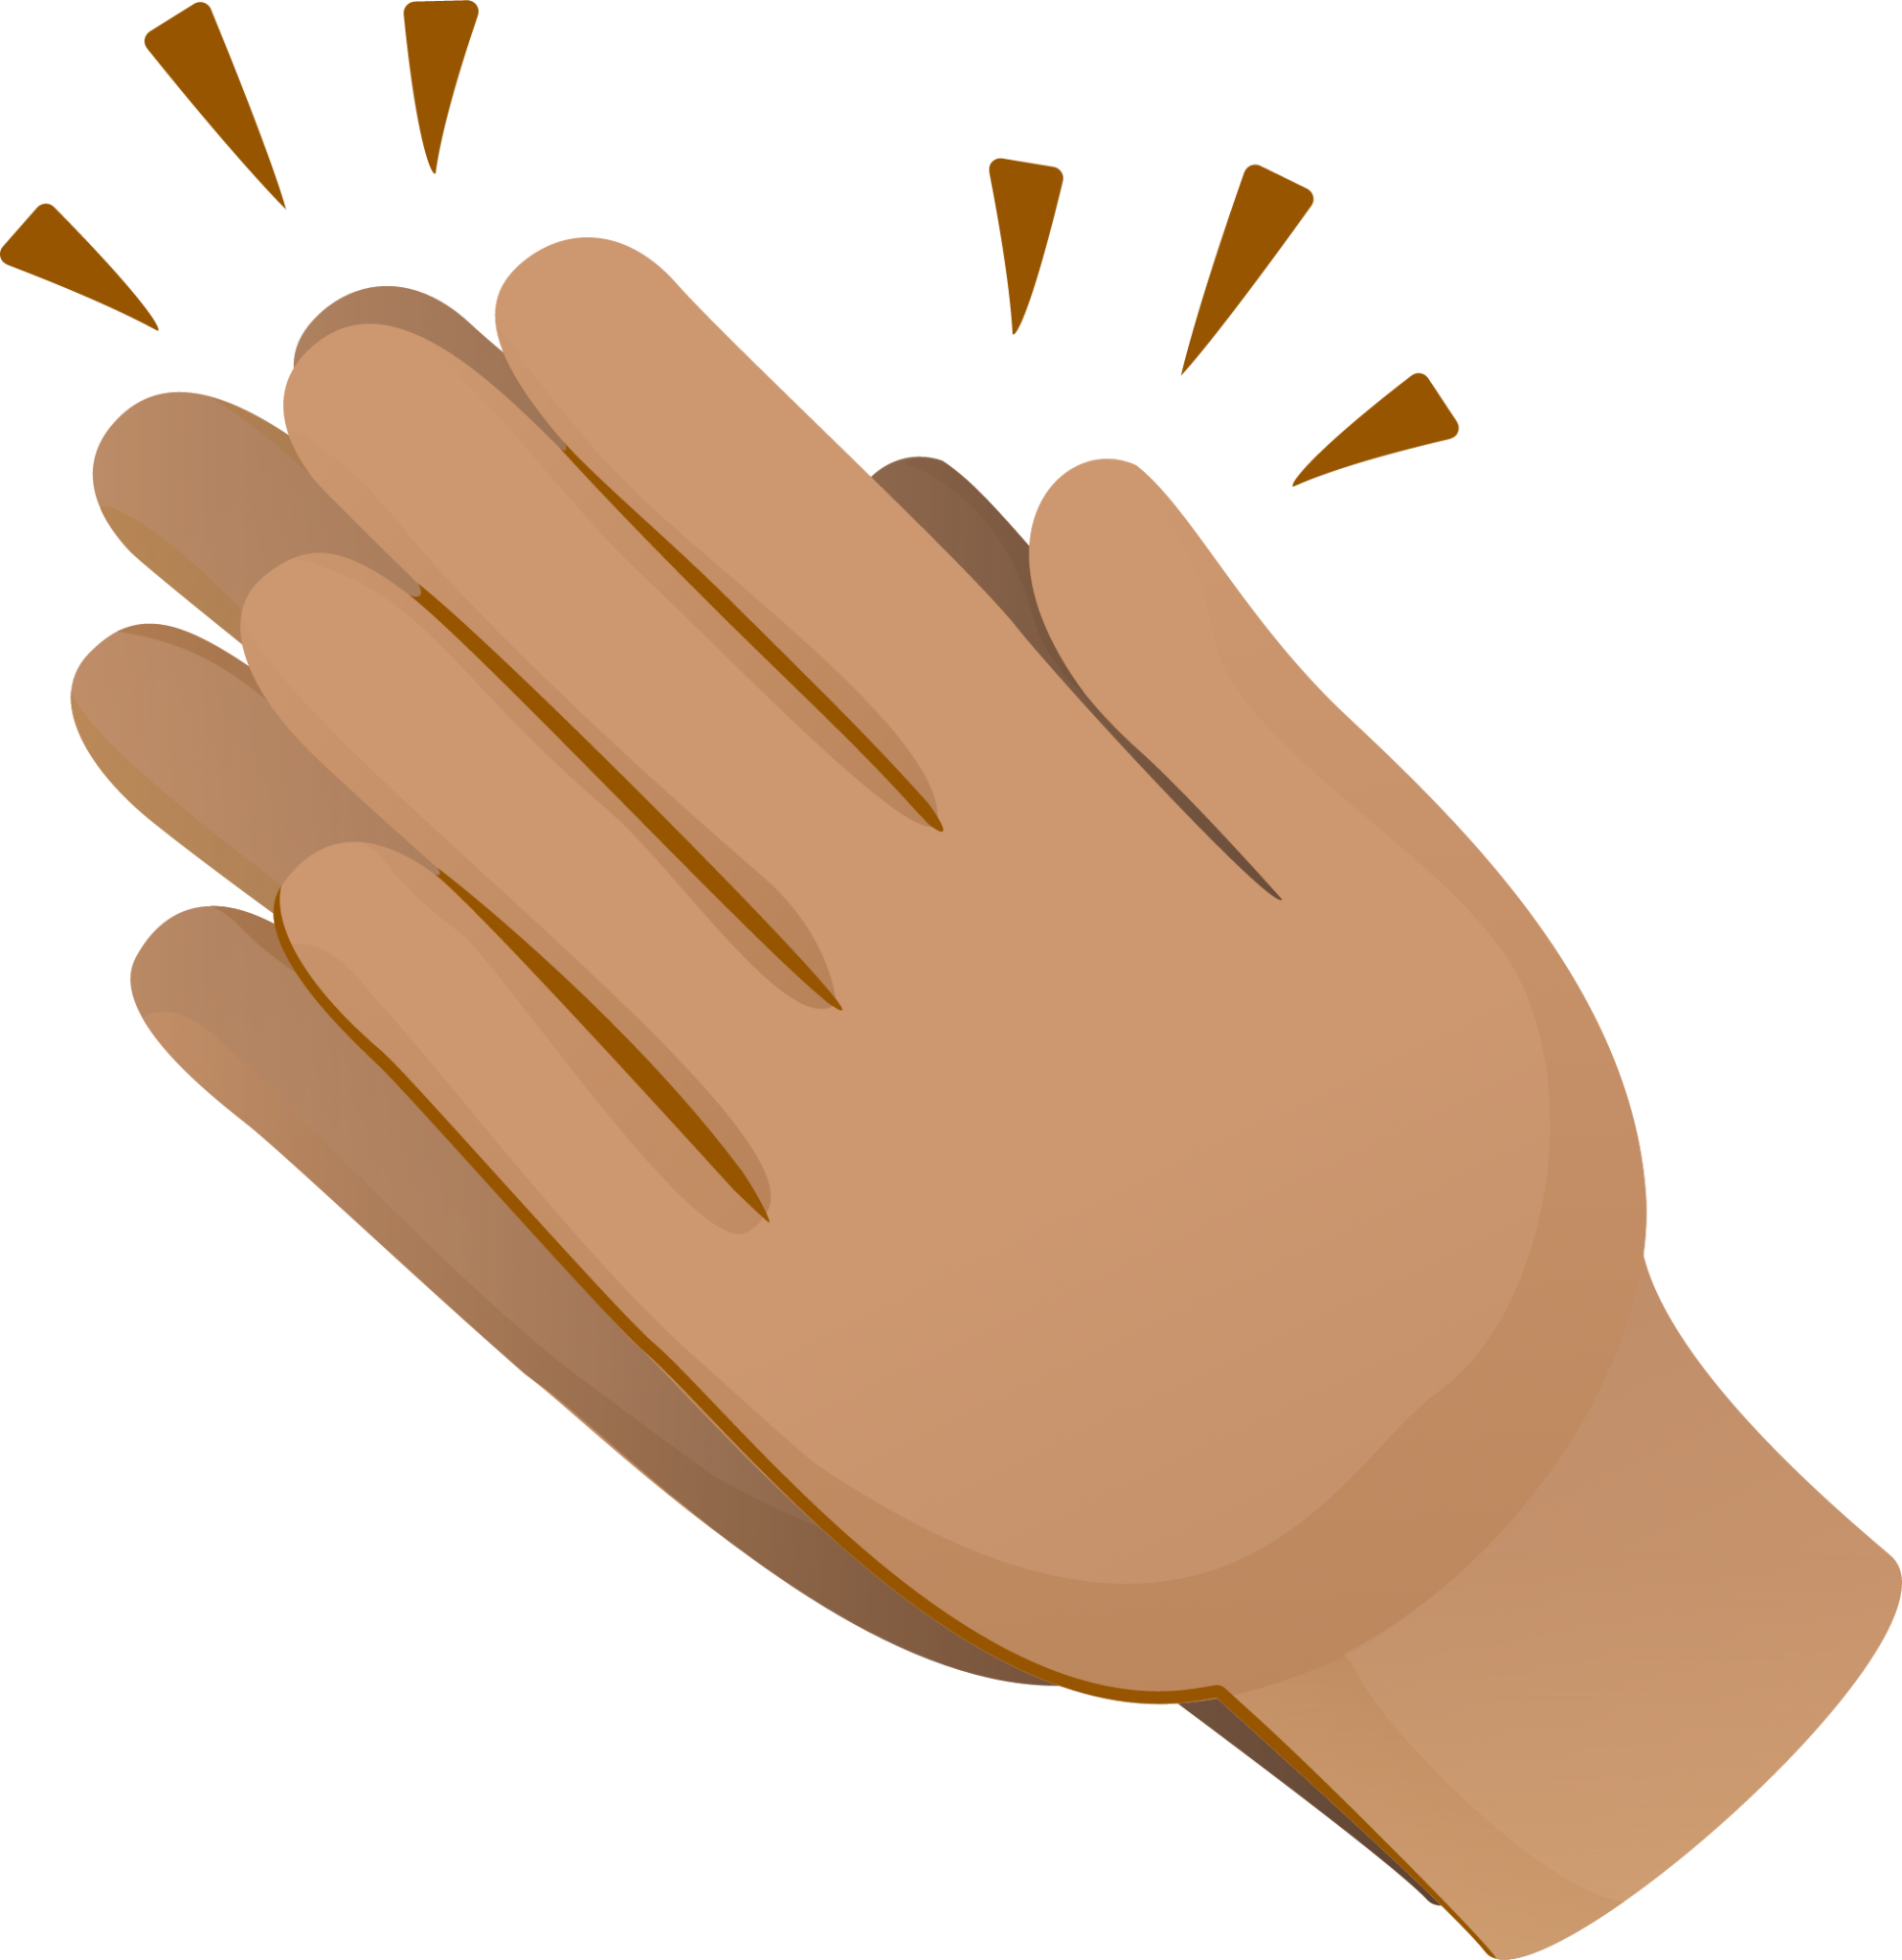 Clapping hands skin 3 emoji emoji